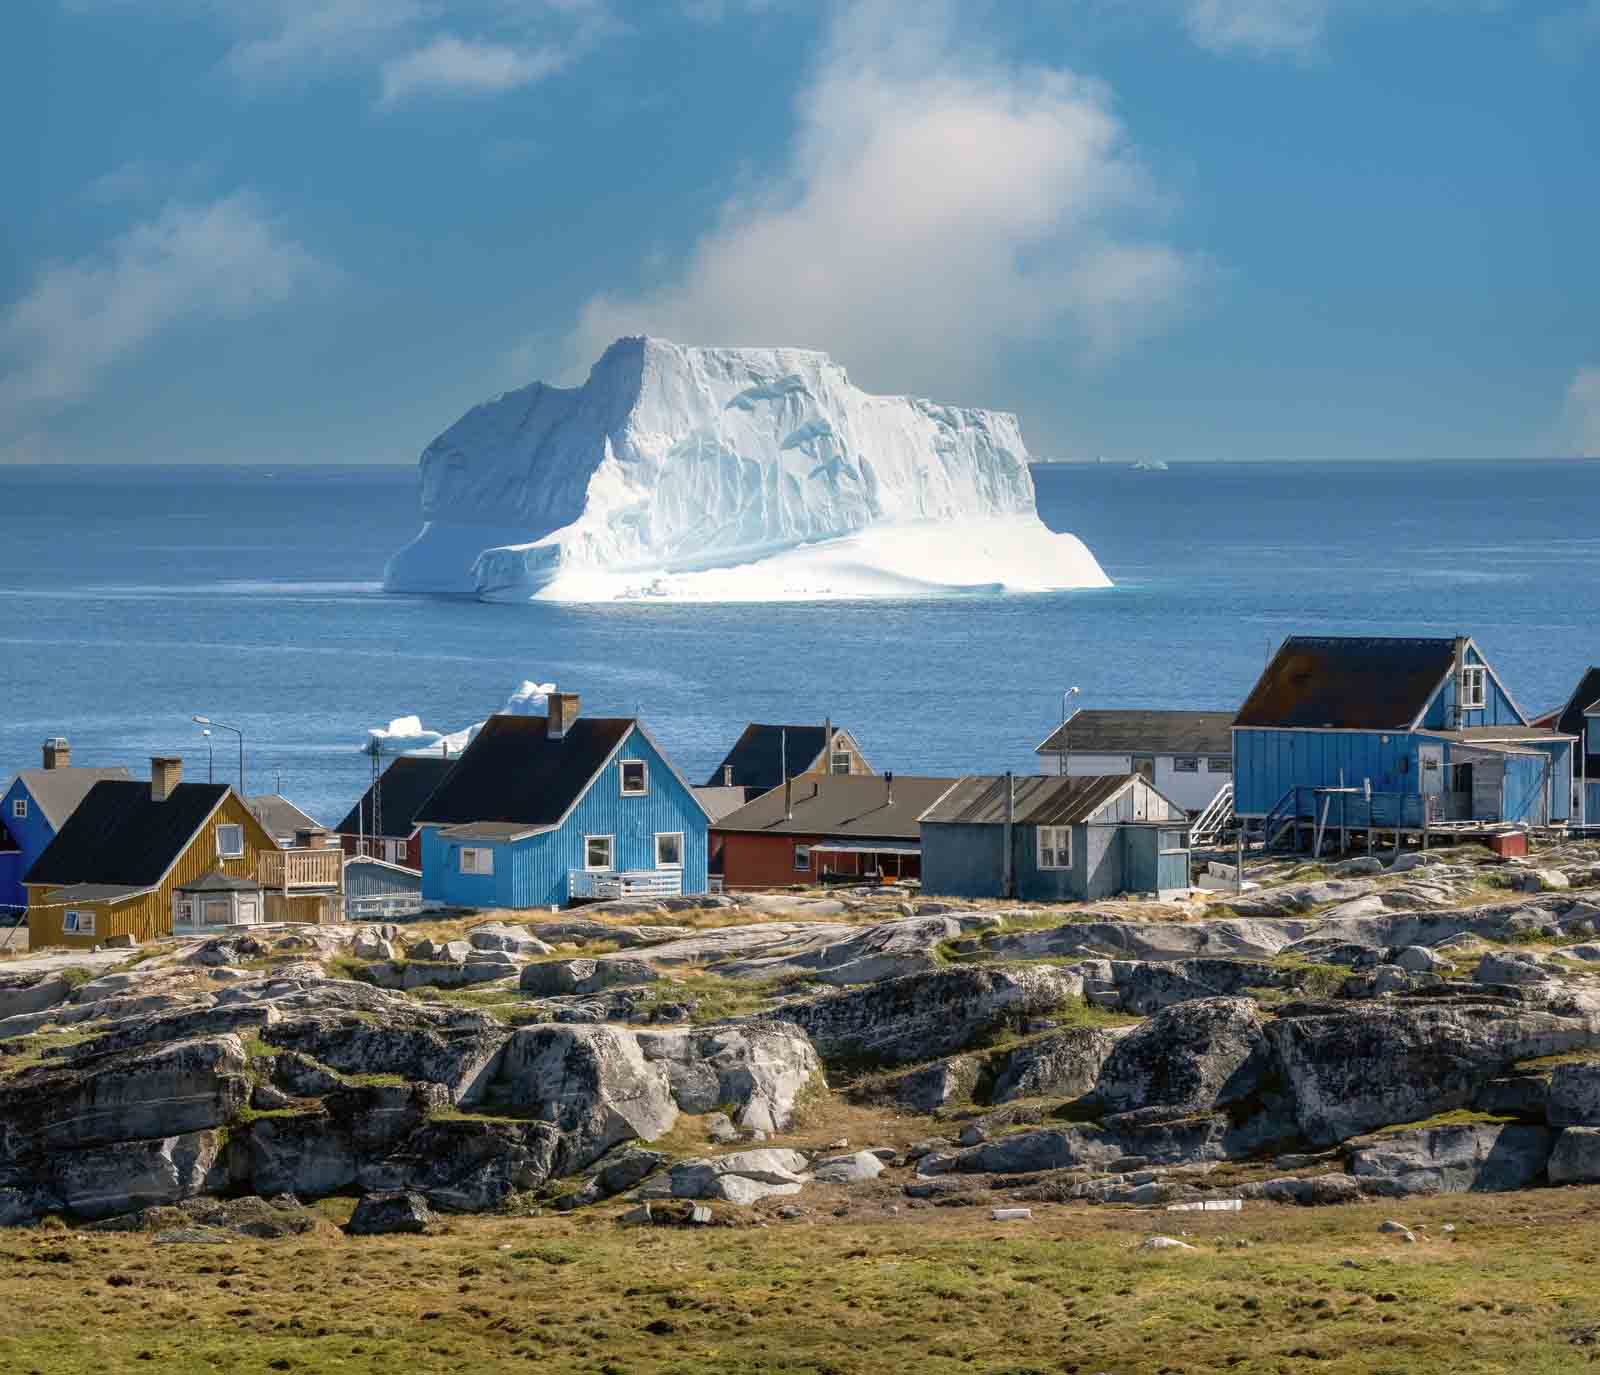 Falklands, South Georgia, and Antarctica: Explorers and Kings